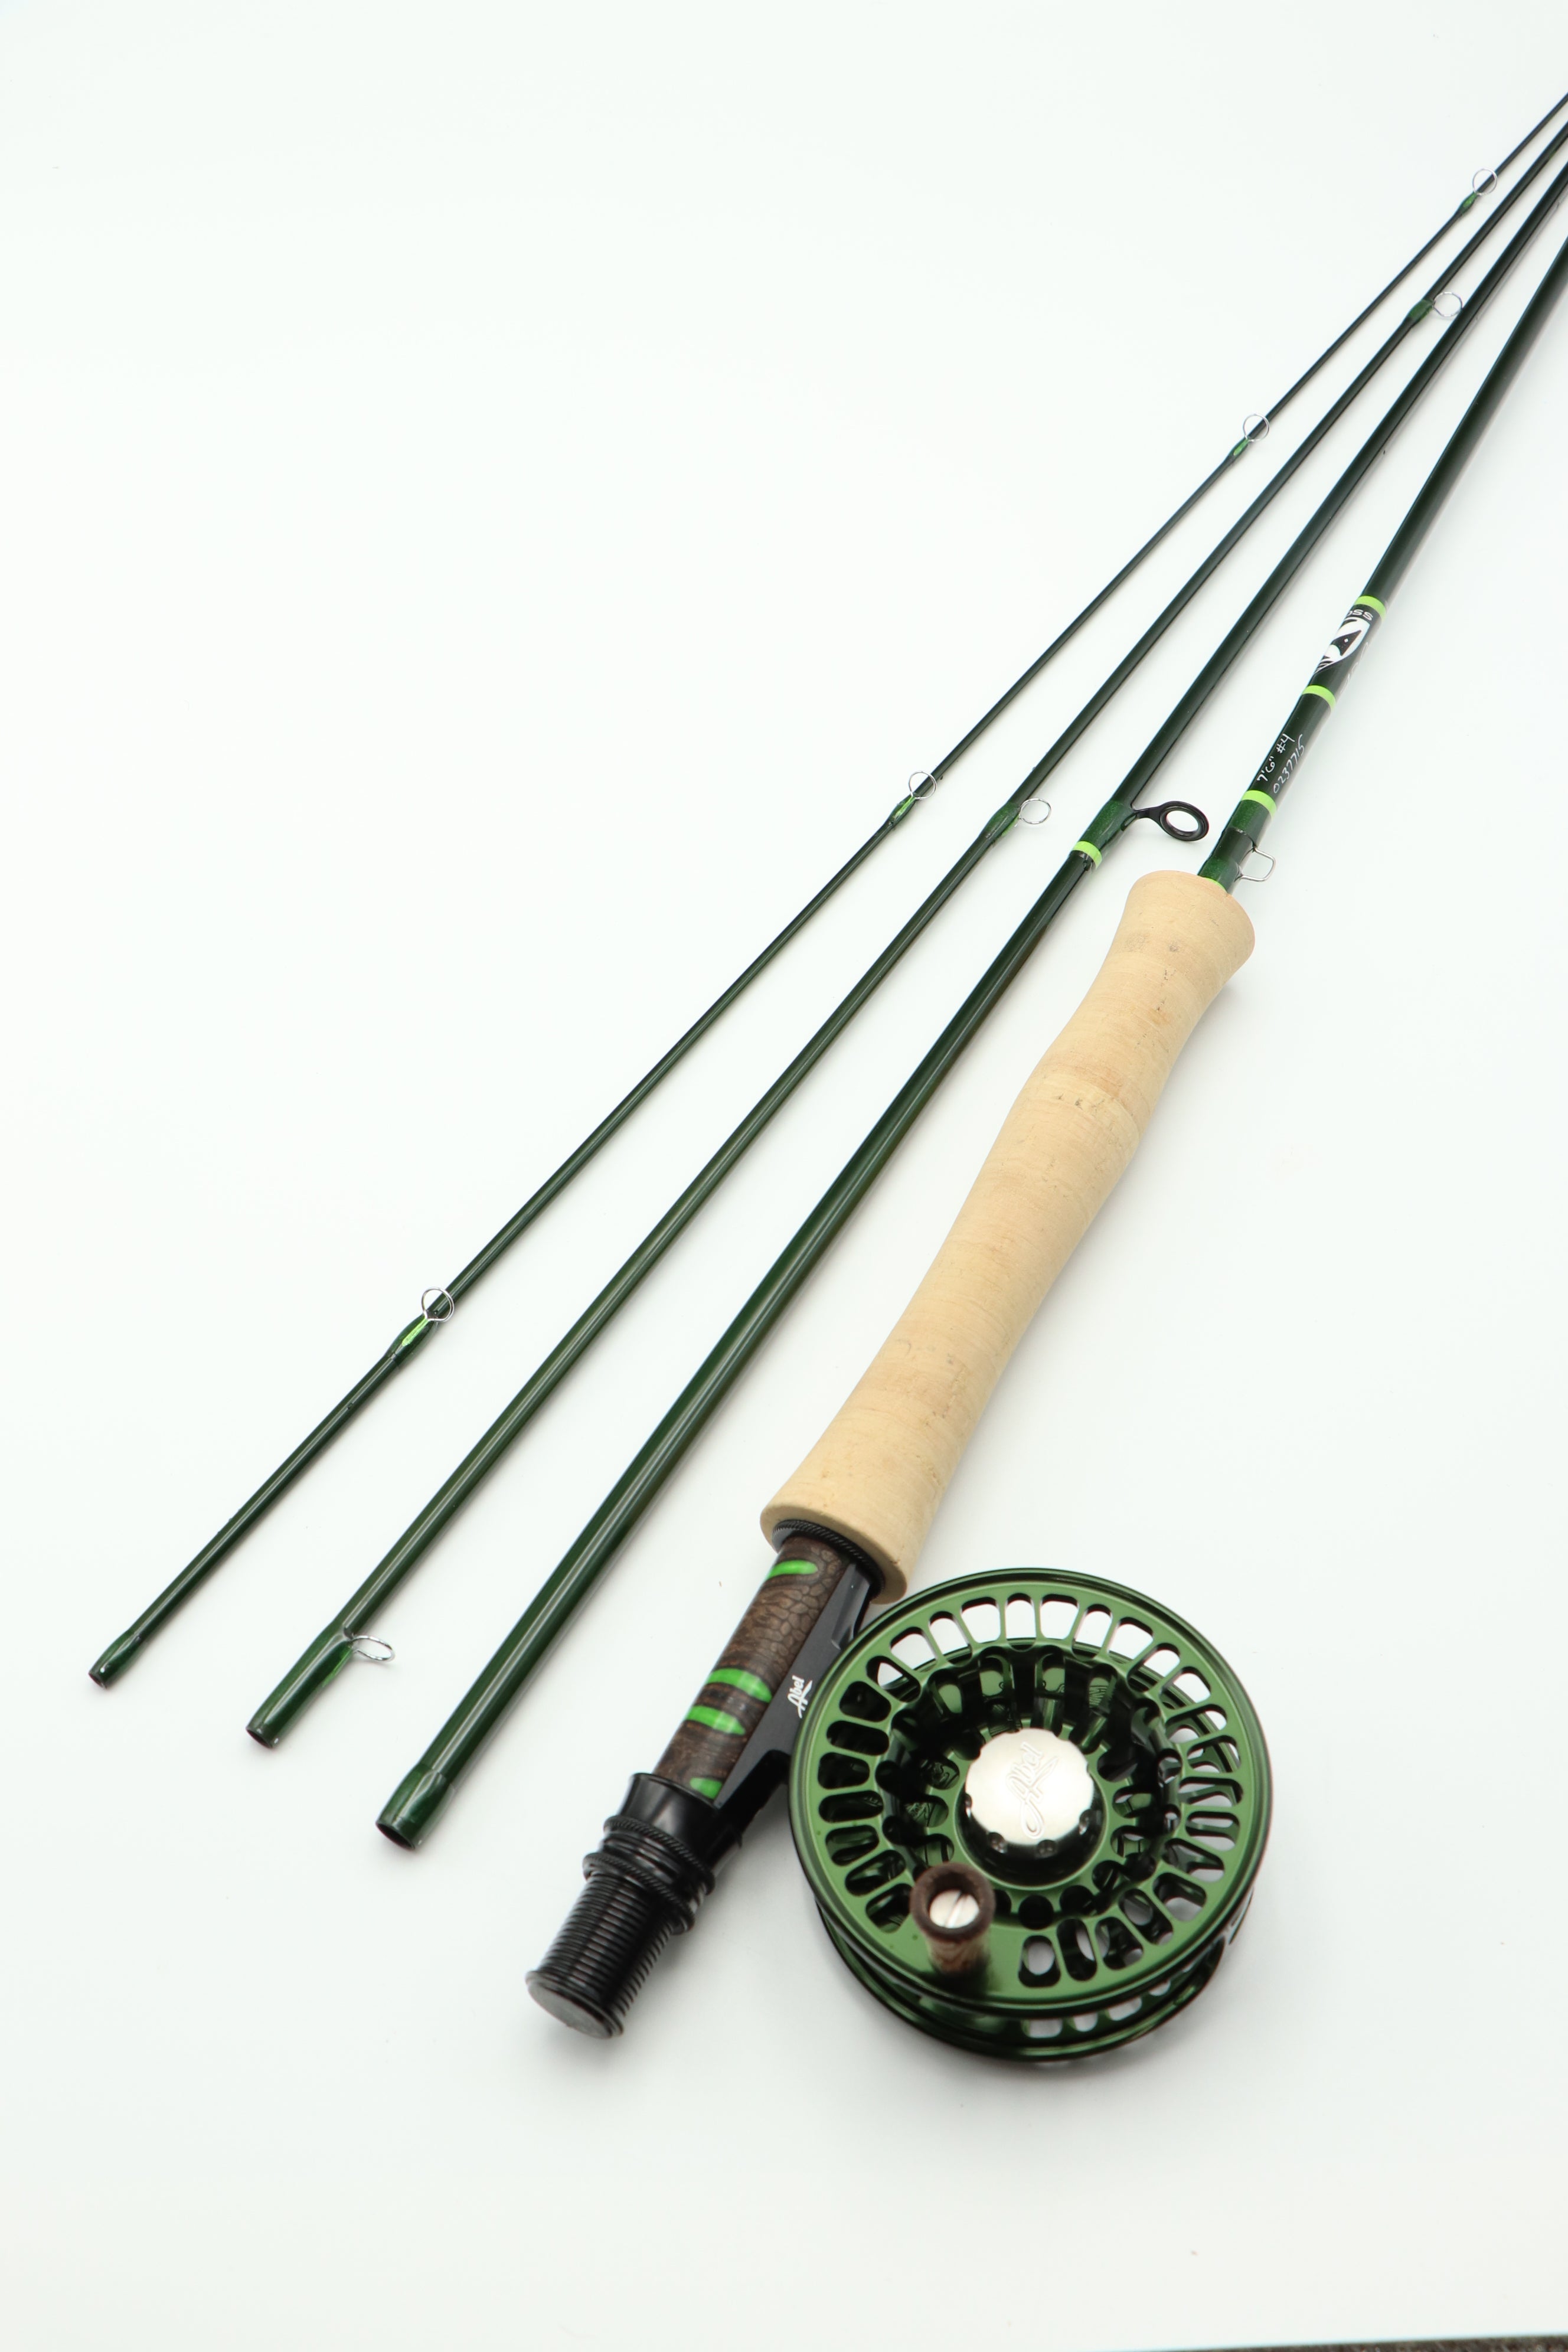 Shu-Fly Ultra-Travel 4 Fly Fishing Rod (6-Piece), Black, 7-Feet x